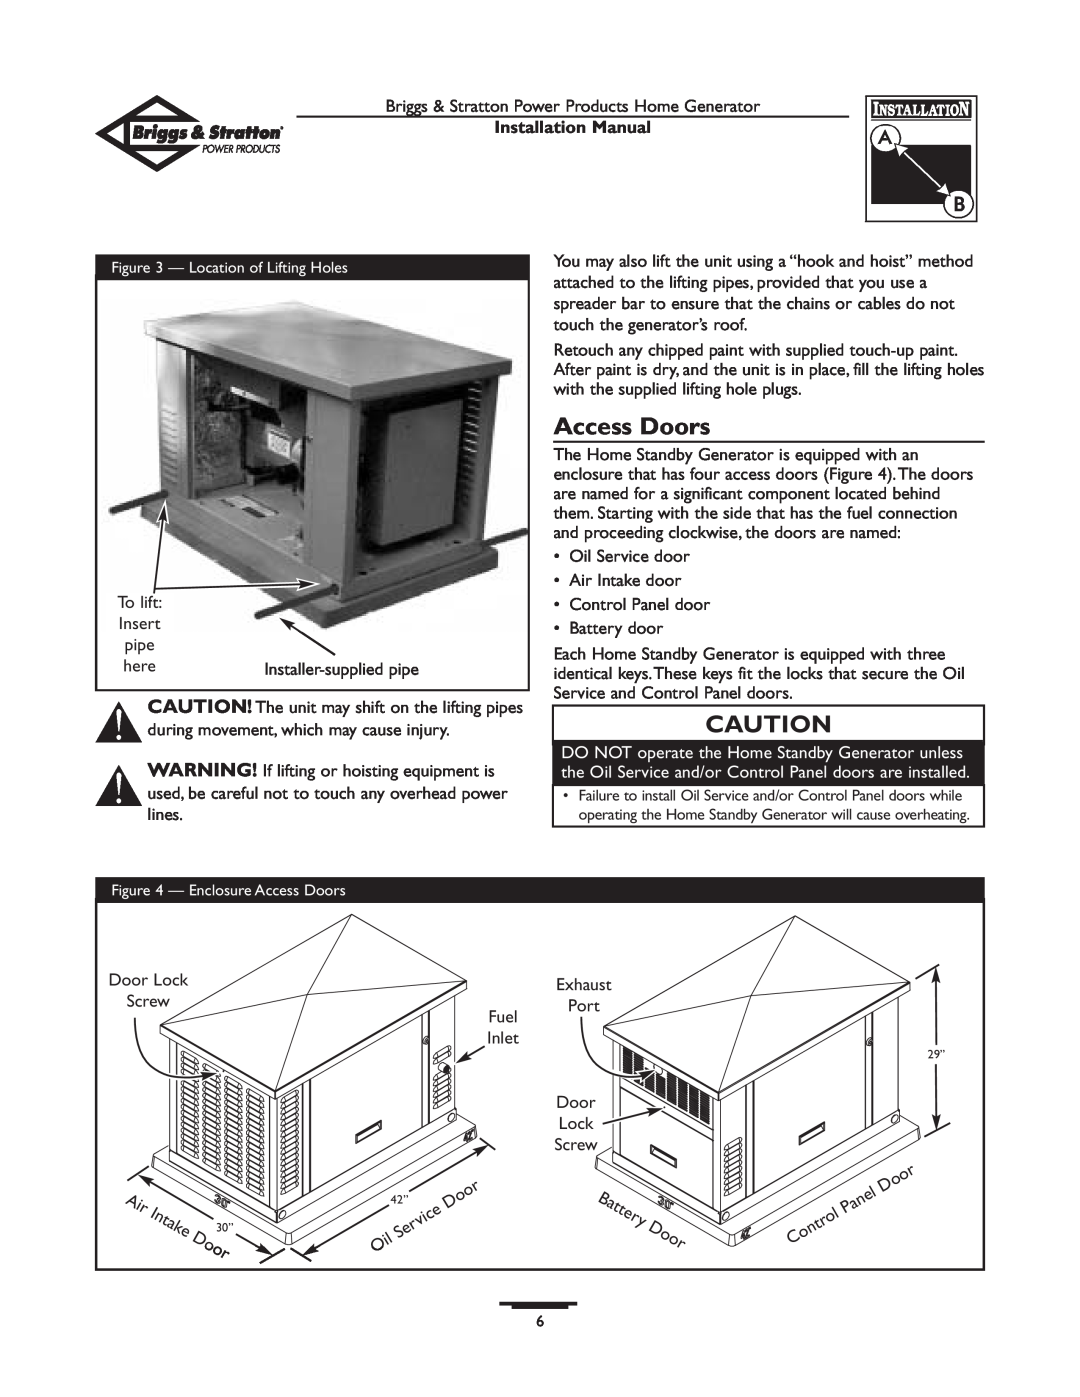 Briggs & Stratton 01938-0 manual Access Doors, Installation Manual 